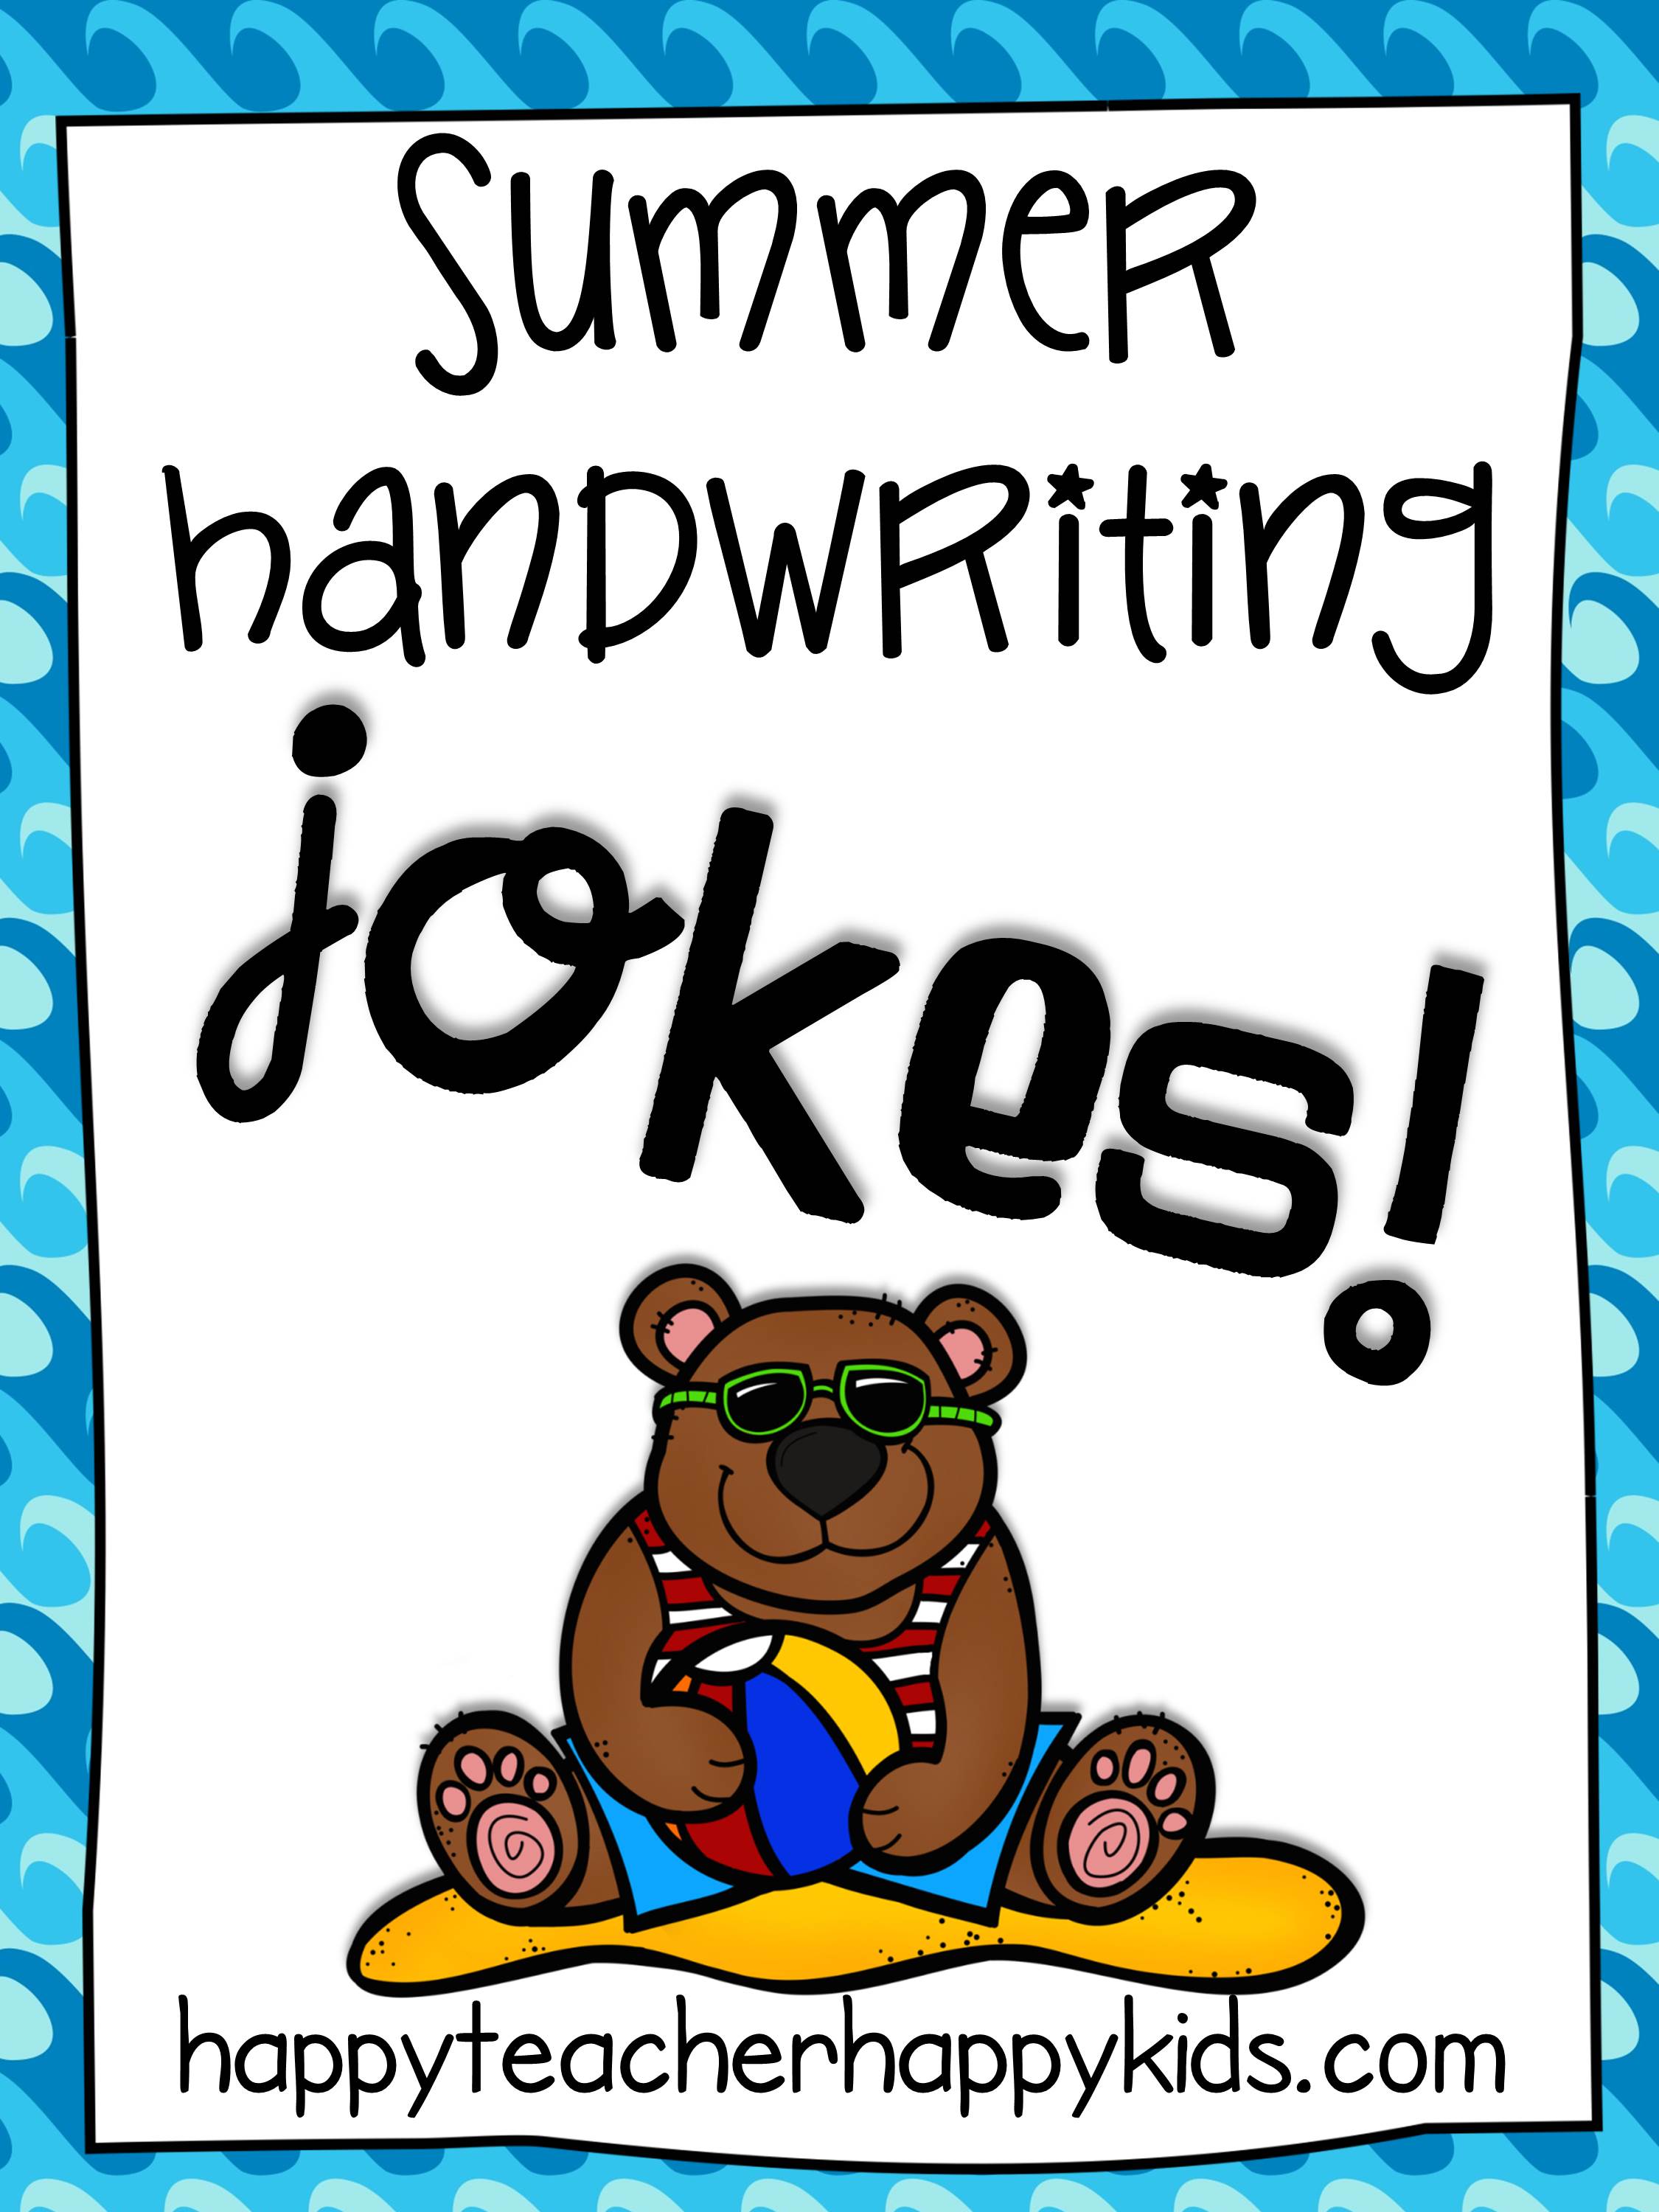 Summer Handwriting Joke Book